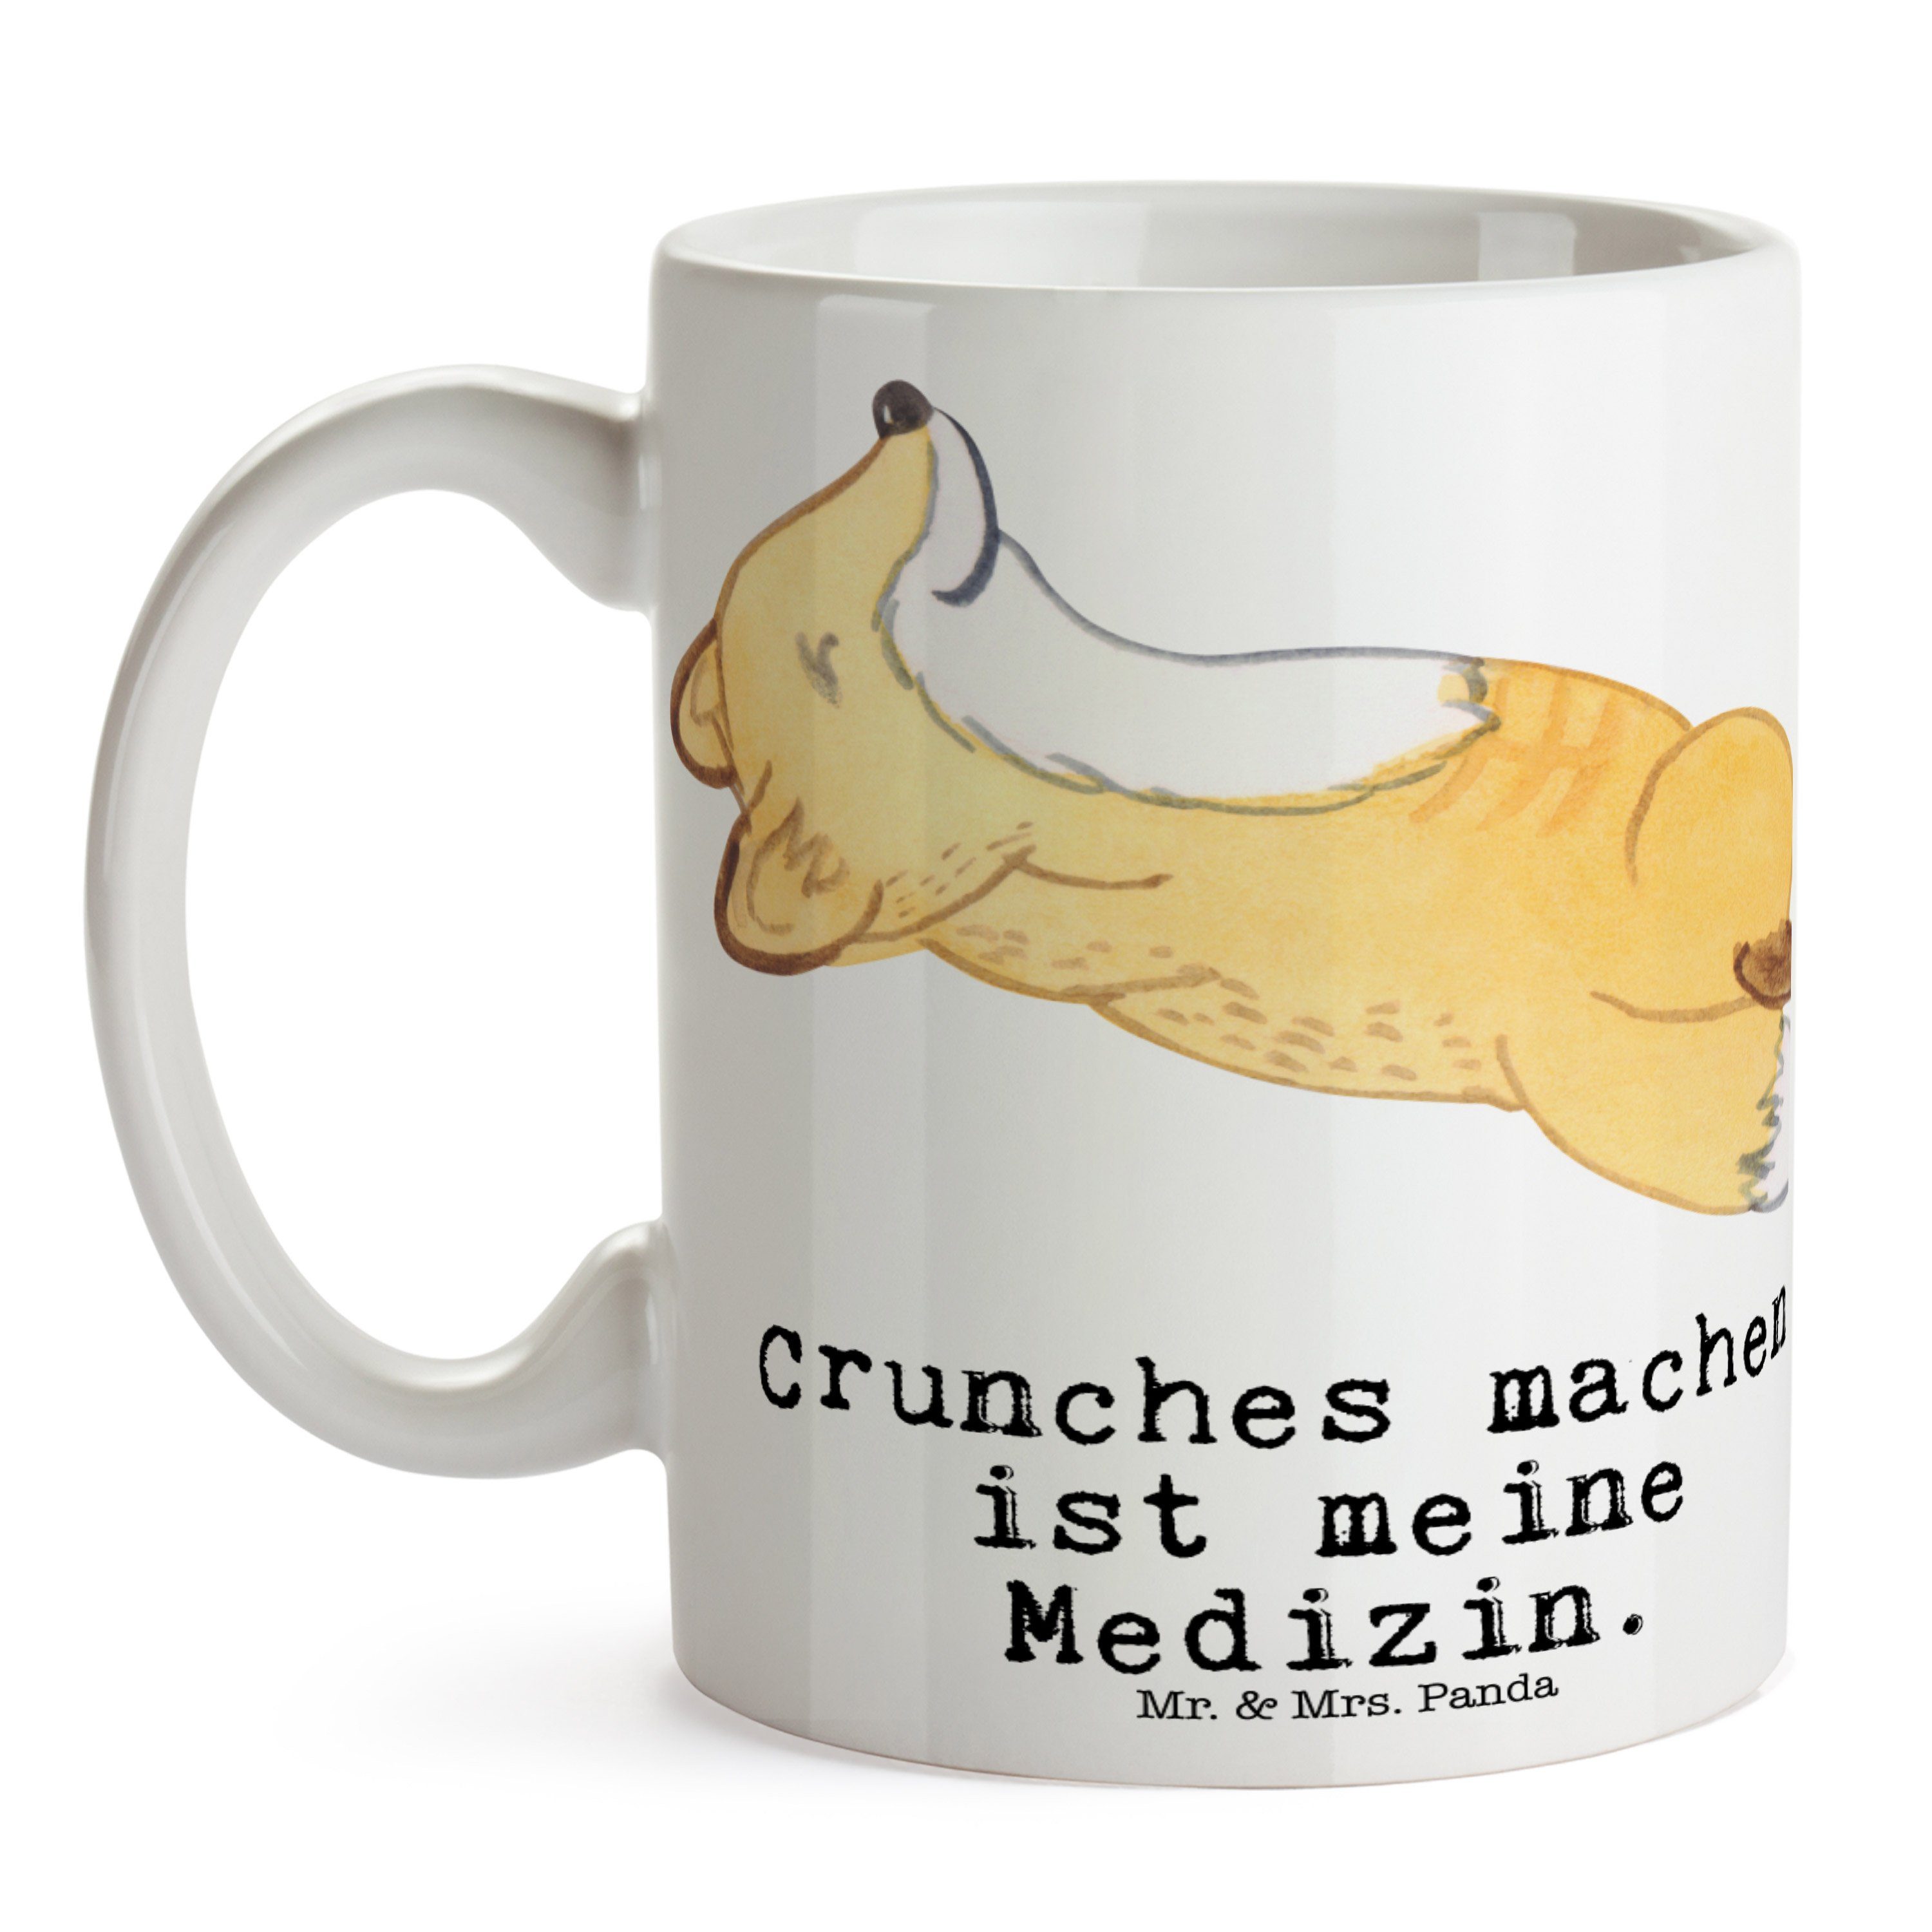 & Mr. - Fuchs Crunches Mrs. Panda Porzellantasse, Tasse Kaffeetasse, Weiß Medizin - Keramik Geschenk,